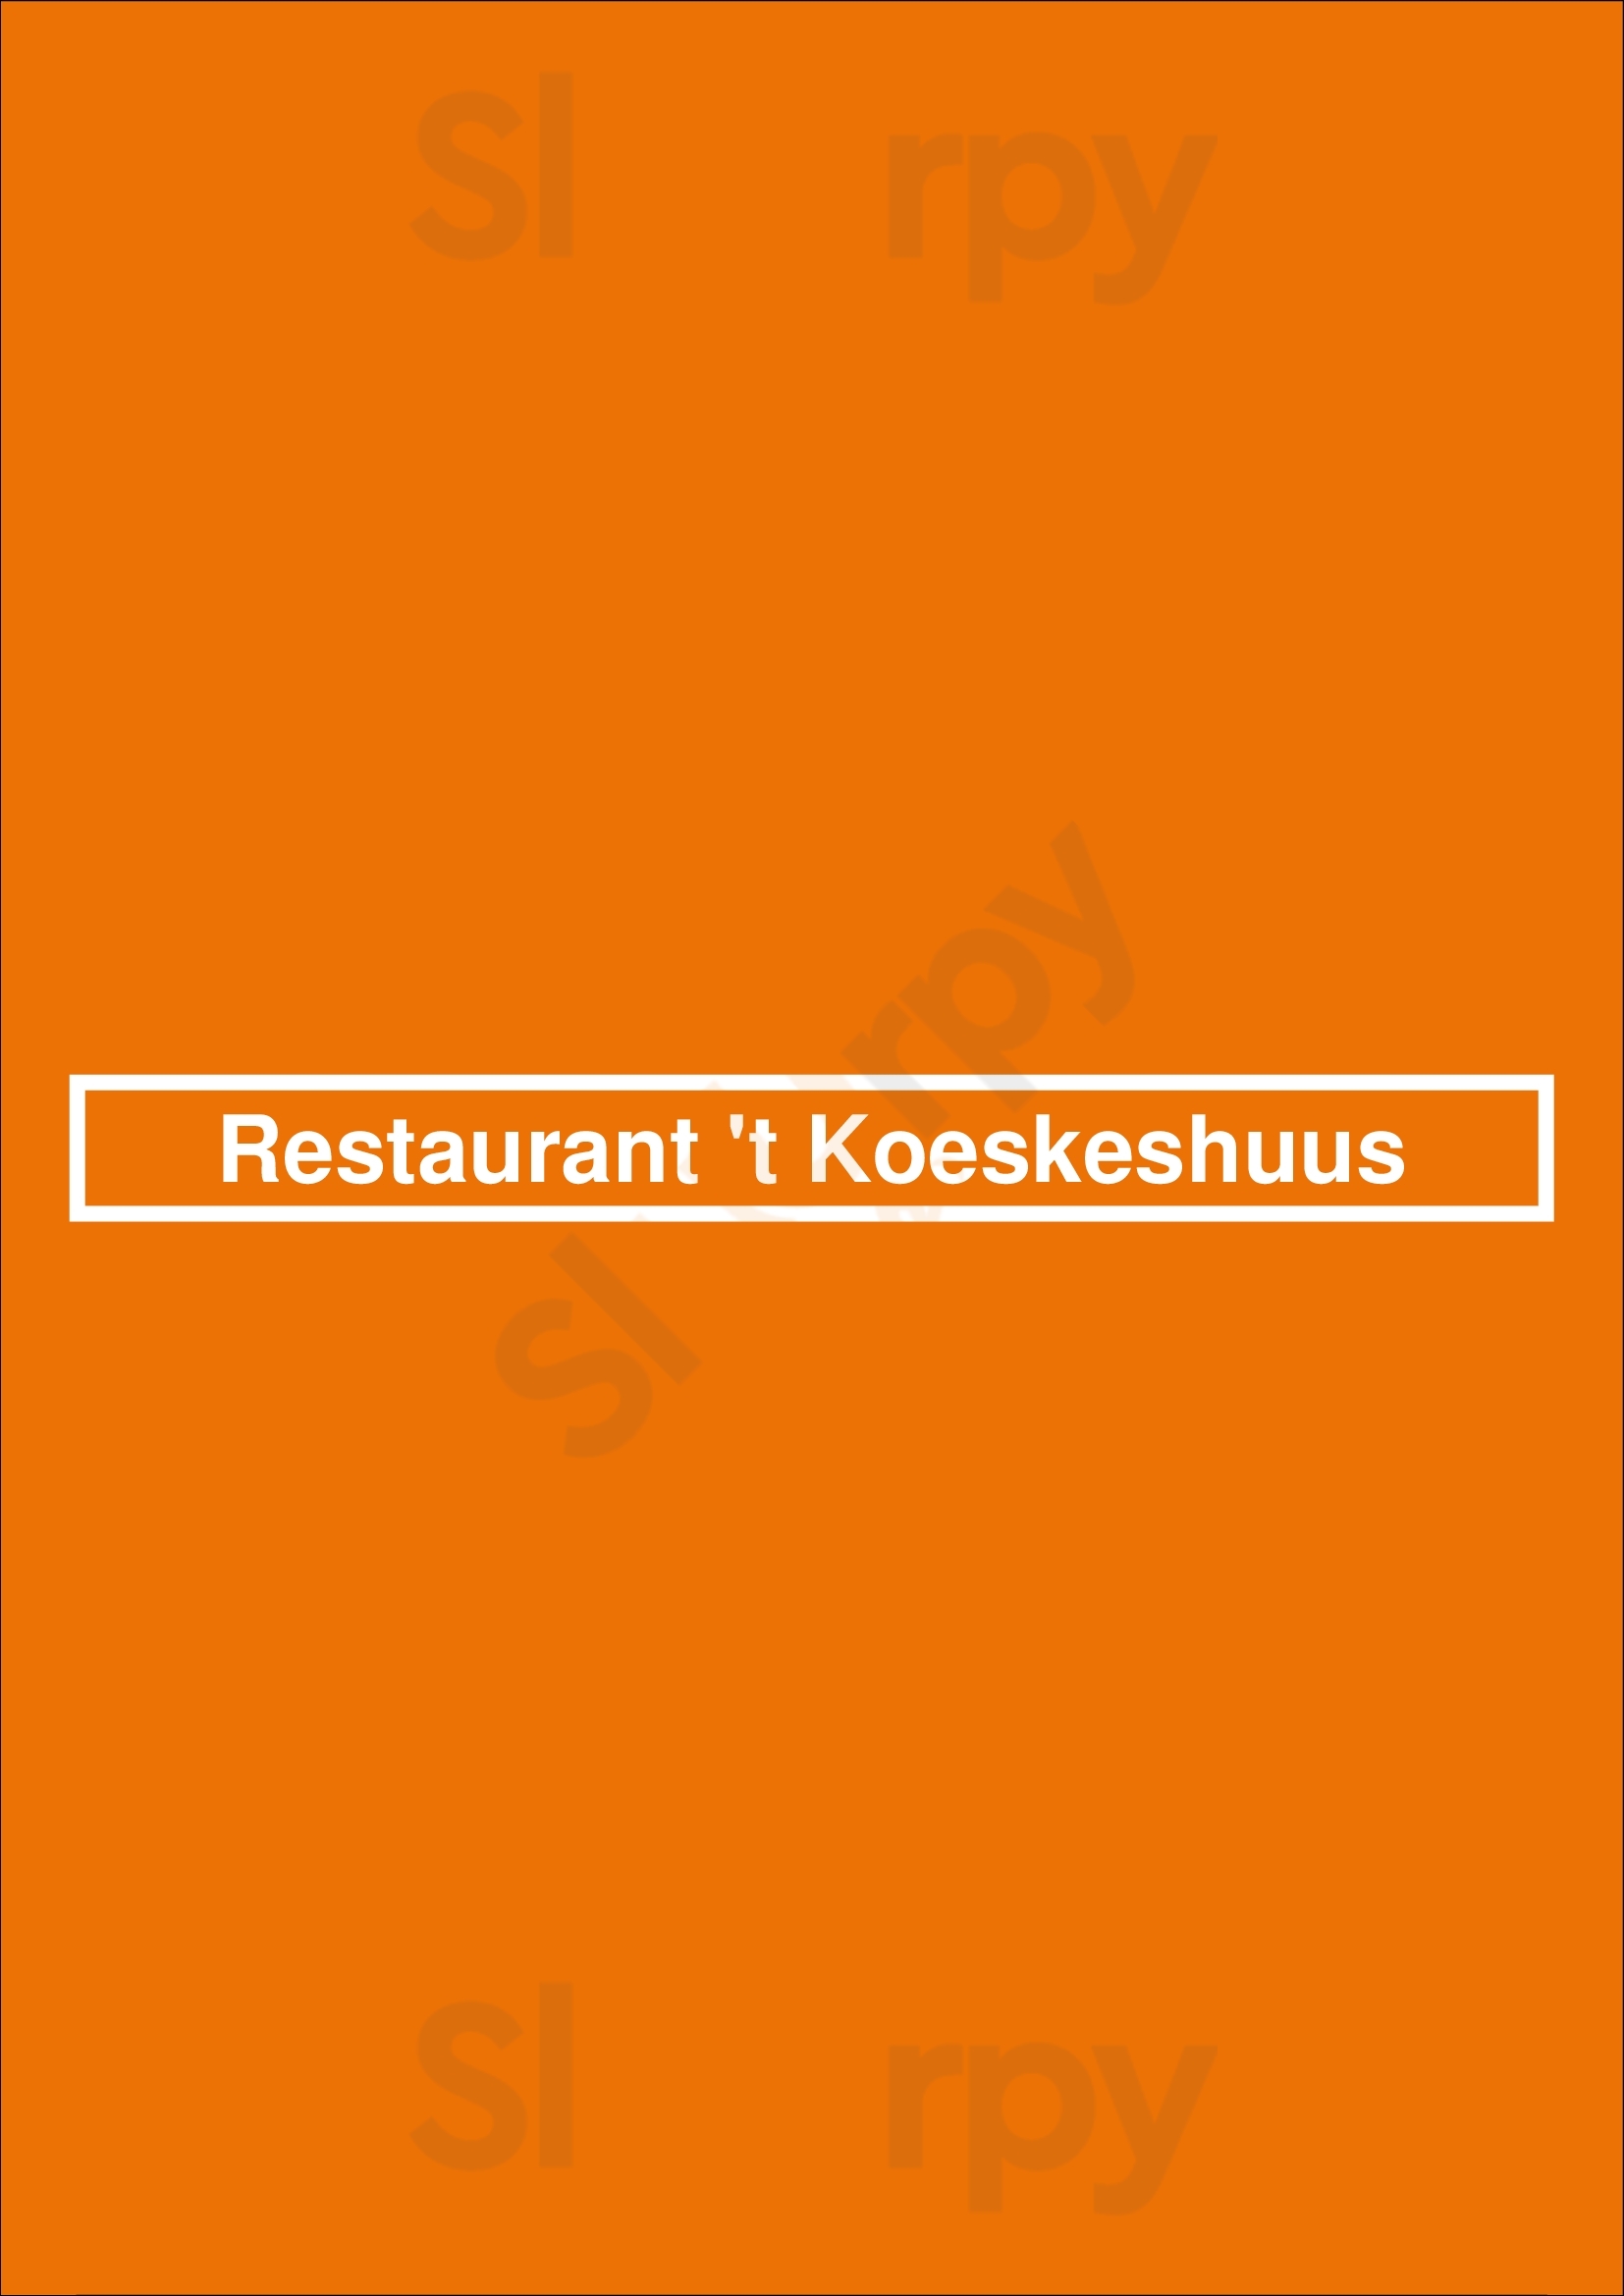 Restaurant 't Koeskeshuus Mook Menu - 1